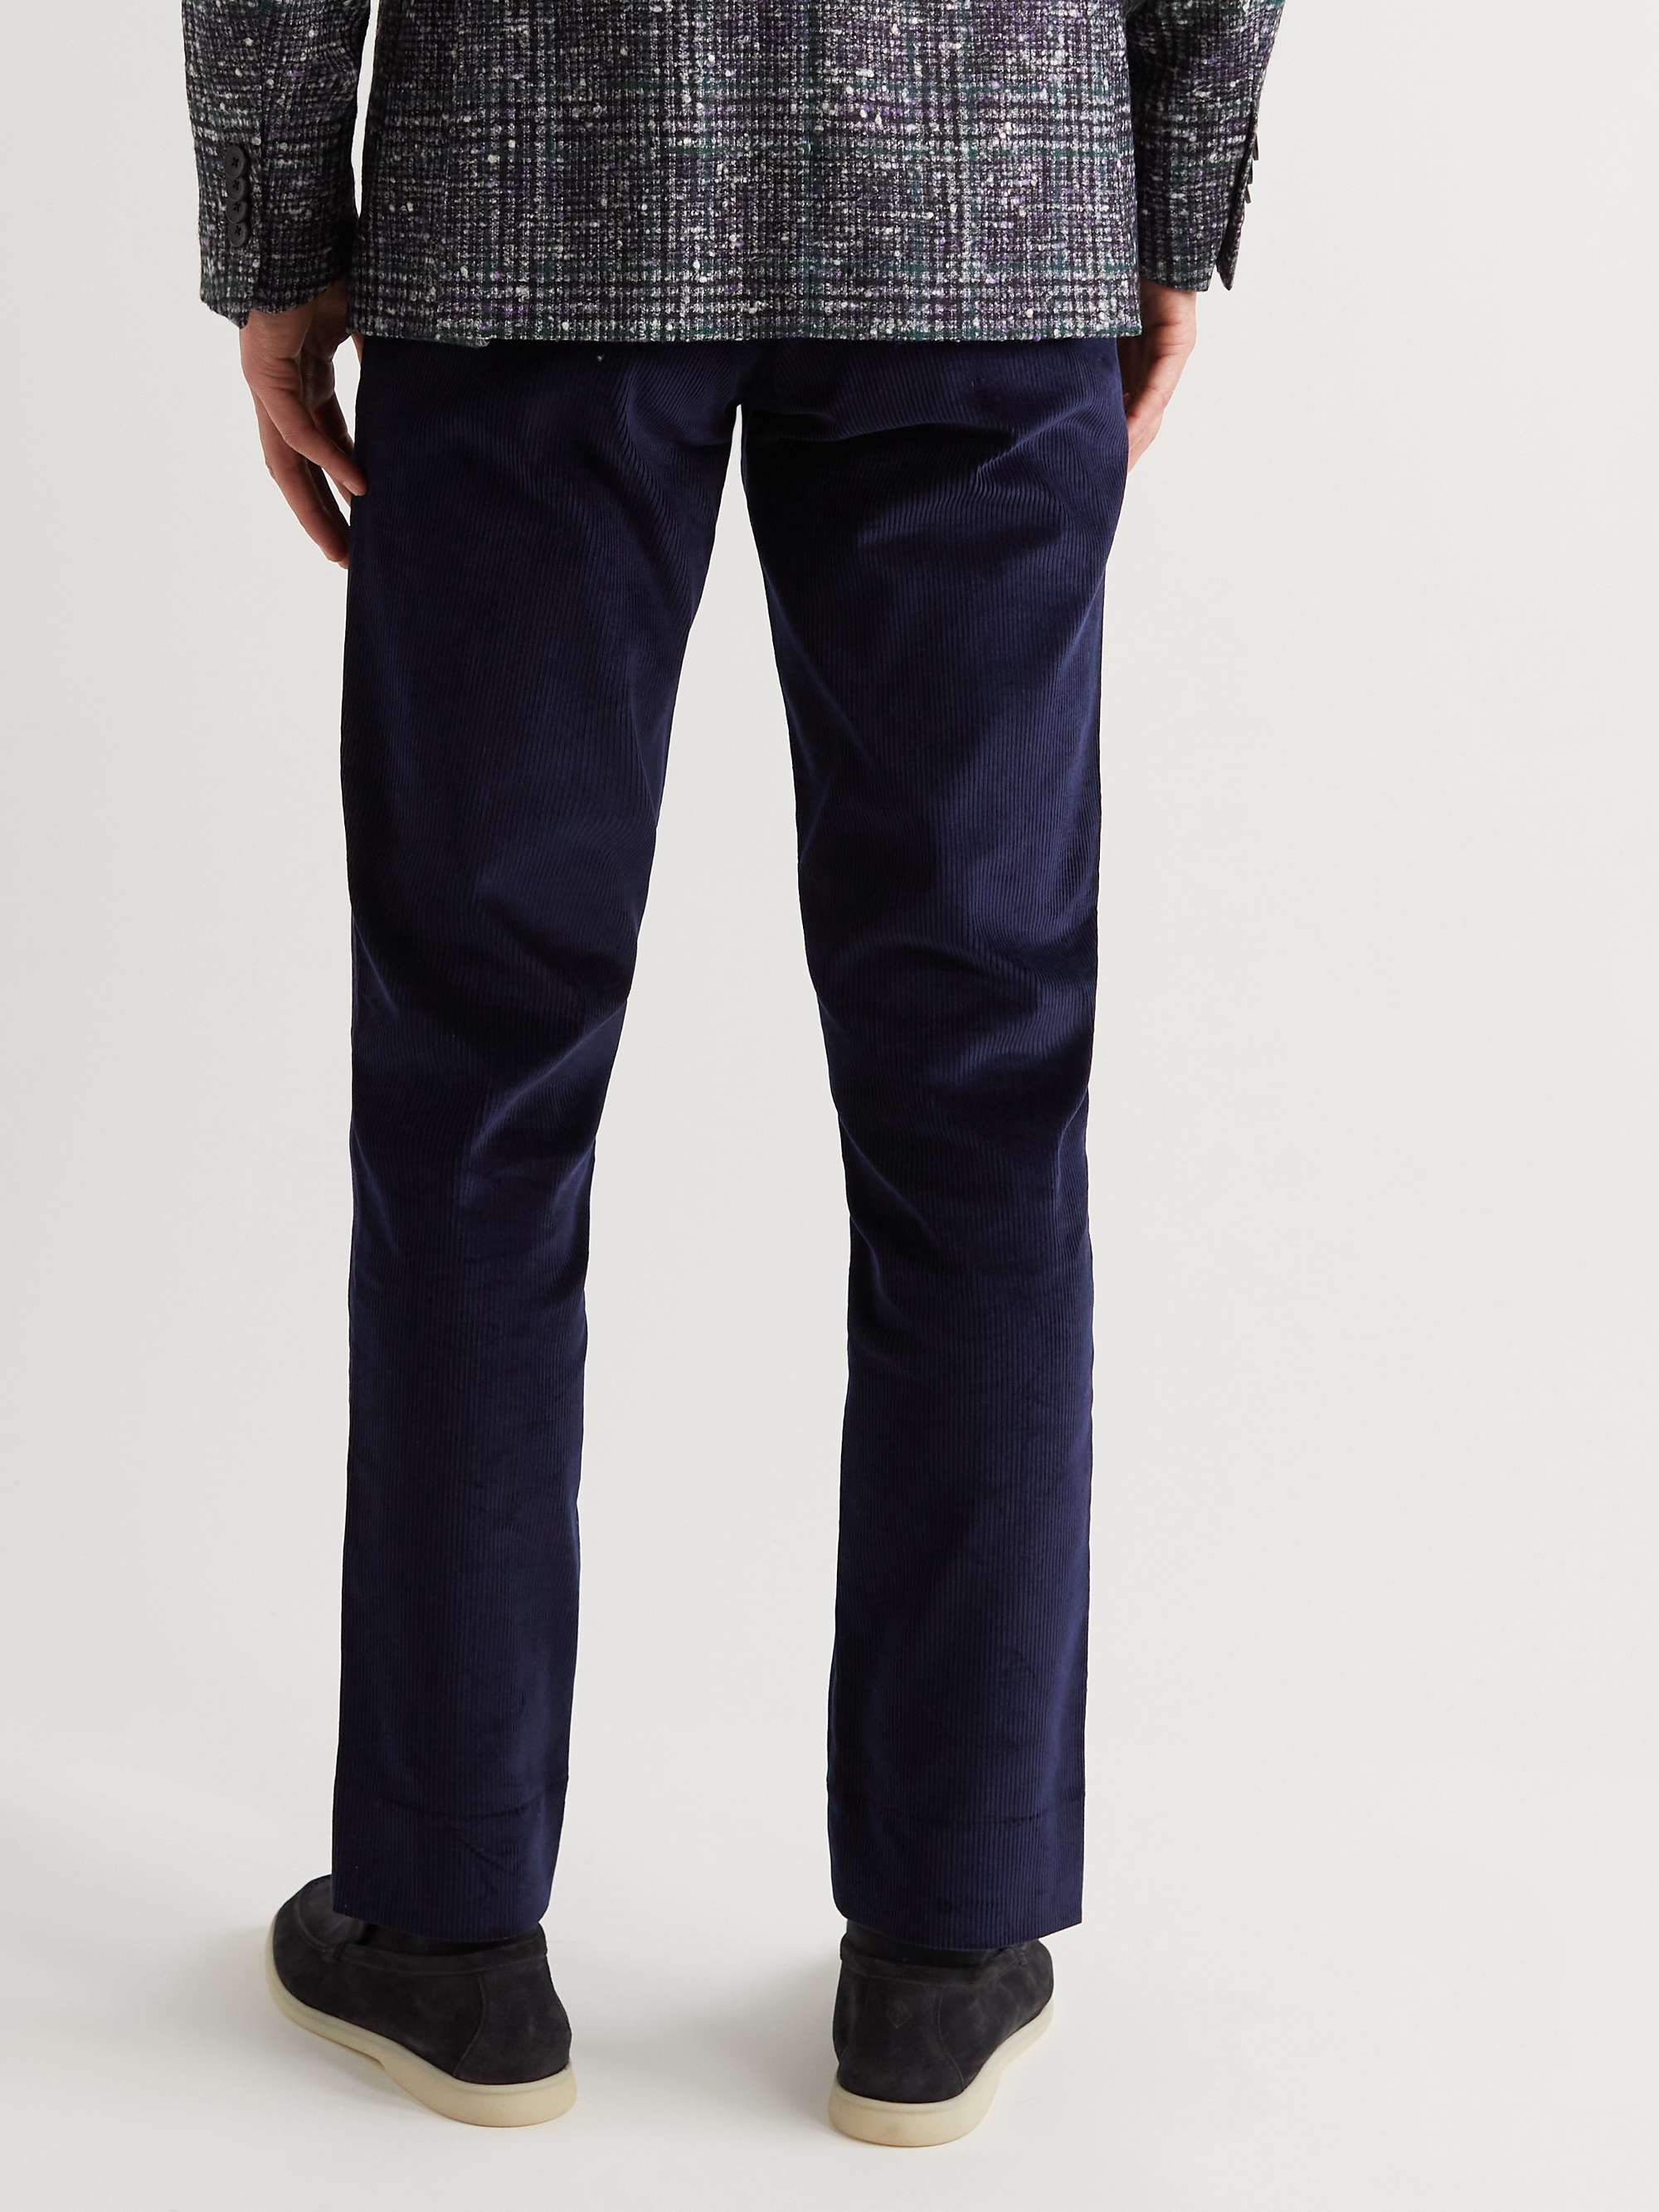 ANDERSON & SHEPPARD Slim-Fit Cotton-Corduroy Trousers